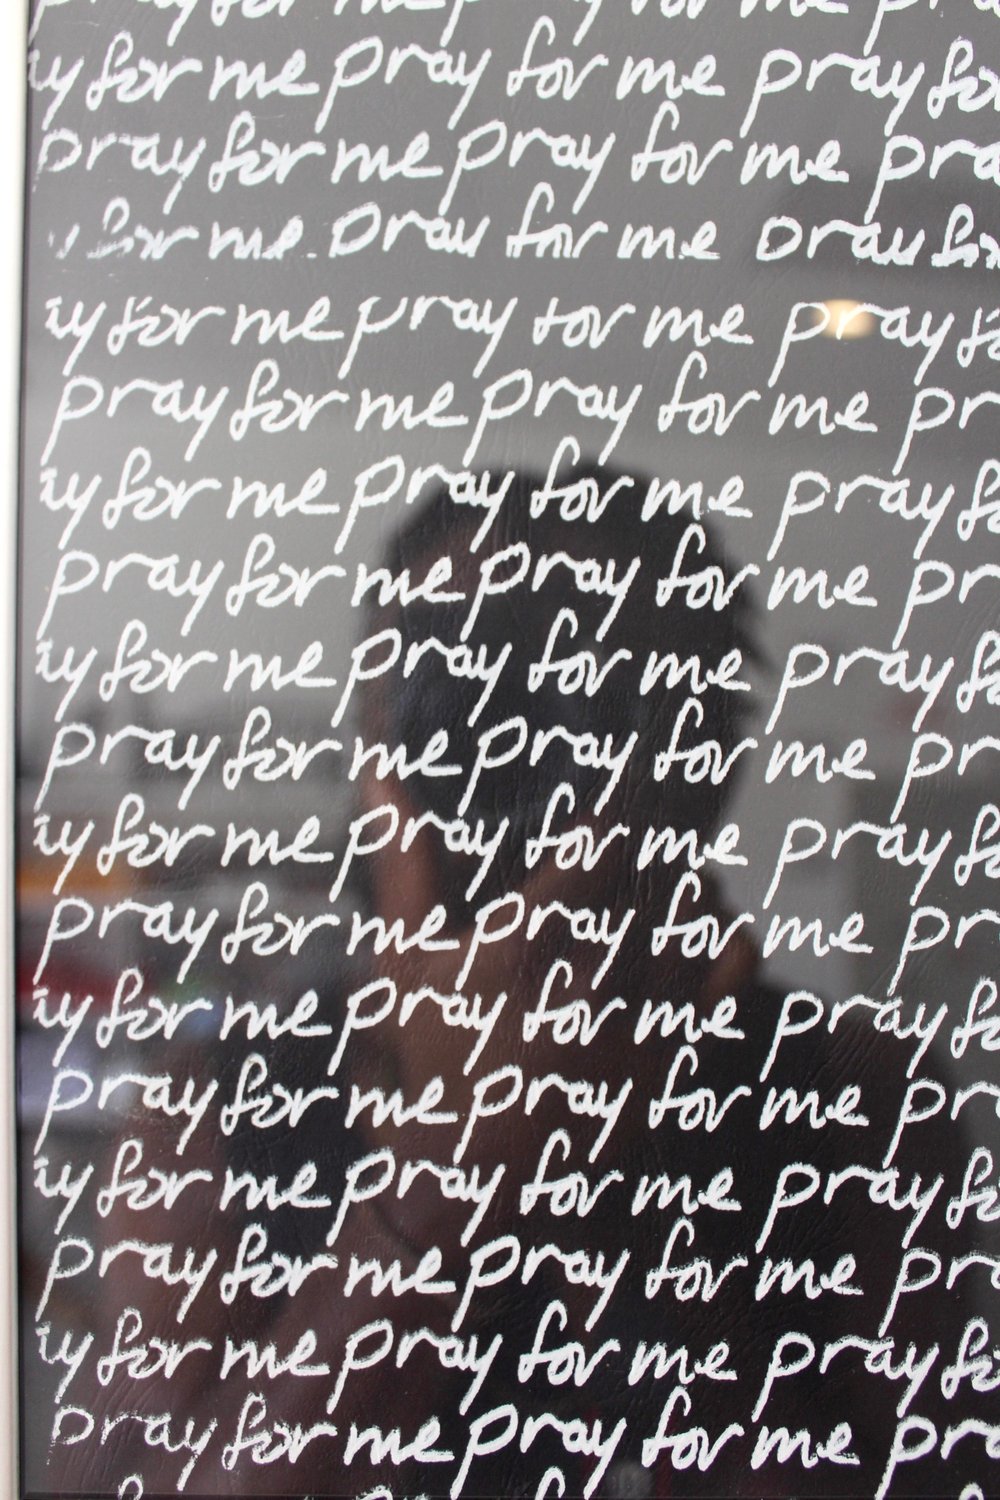 “pray for me” 11 1/2in x 15in framed silkscreen print 